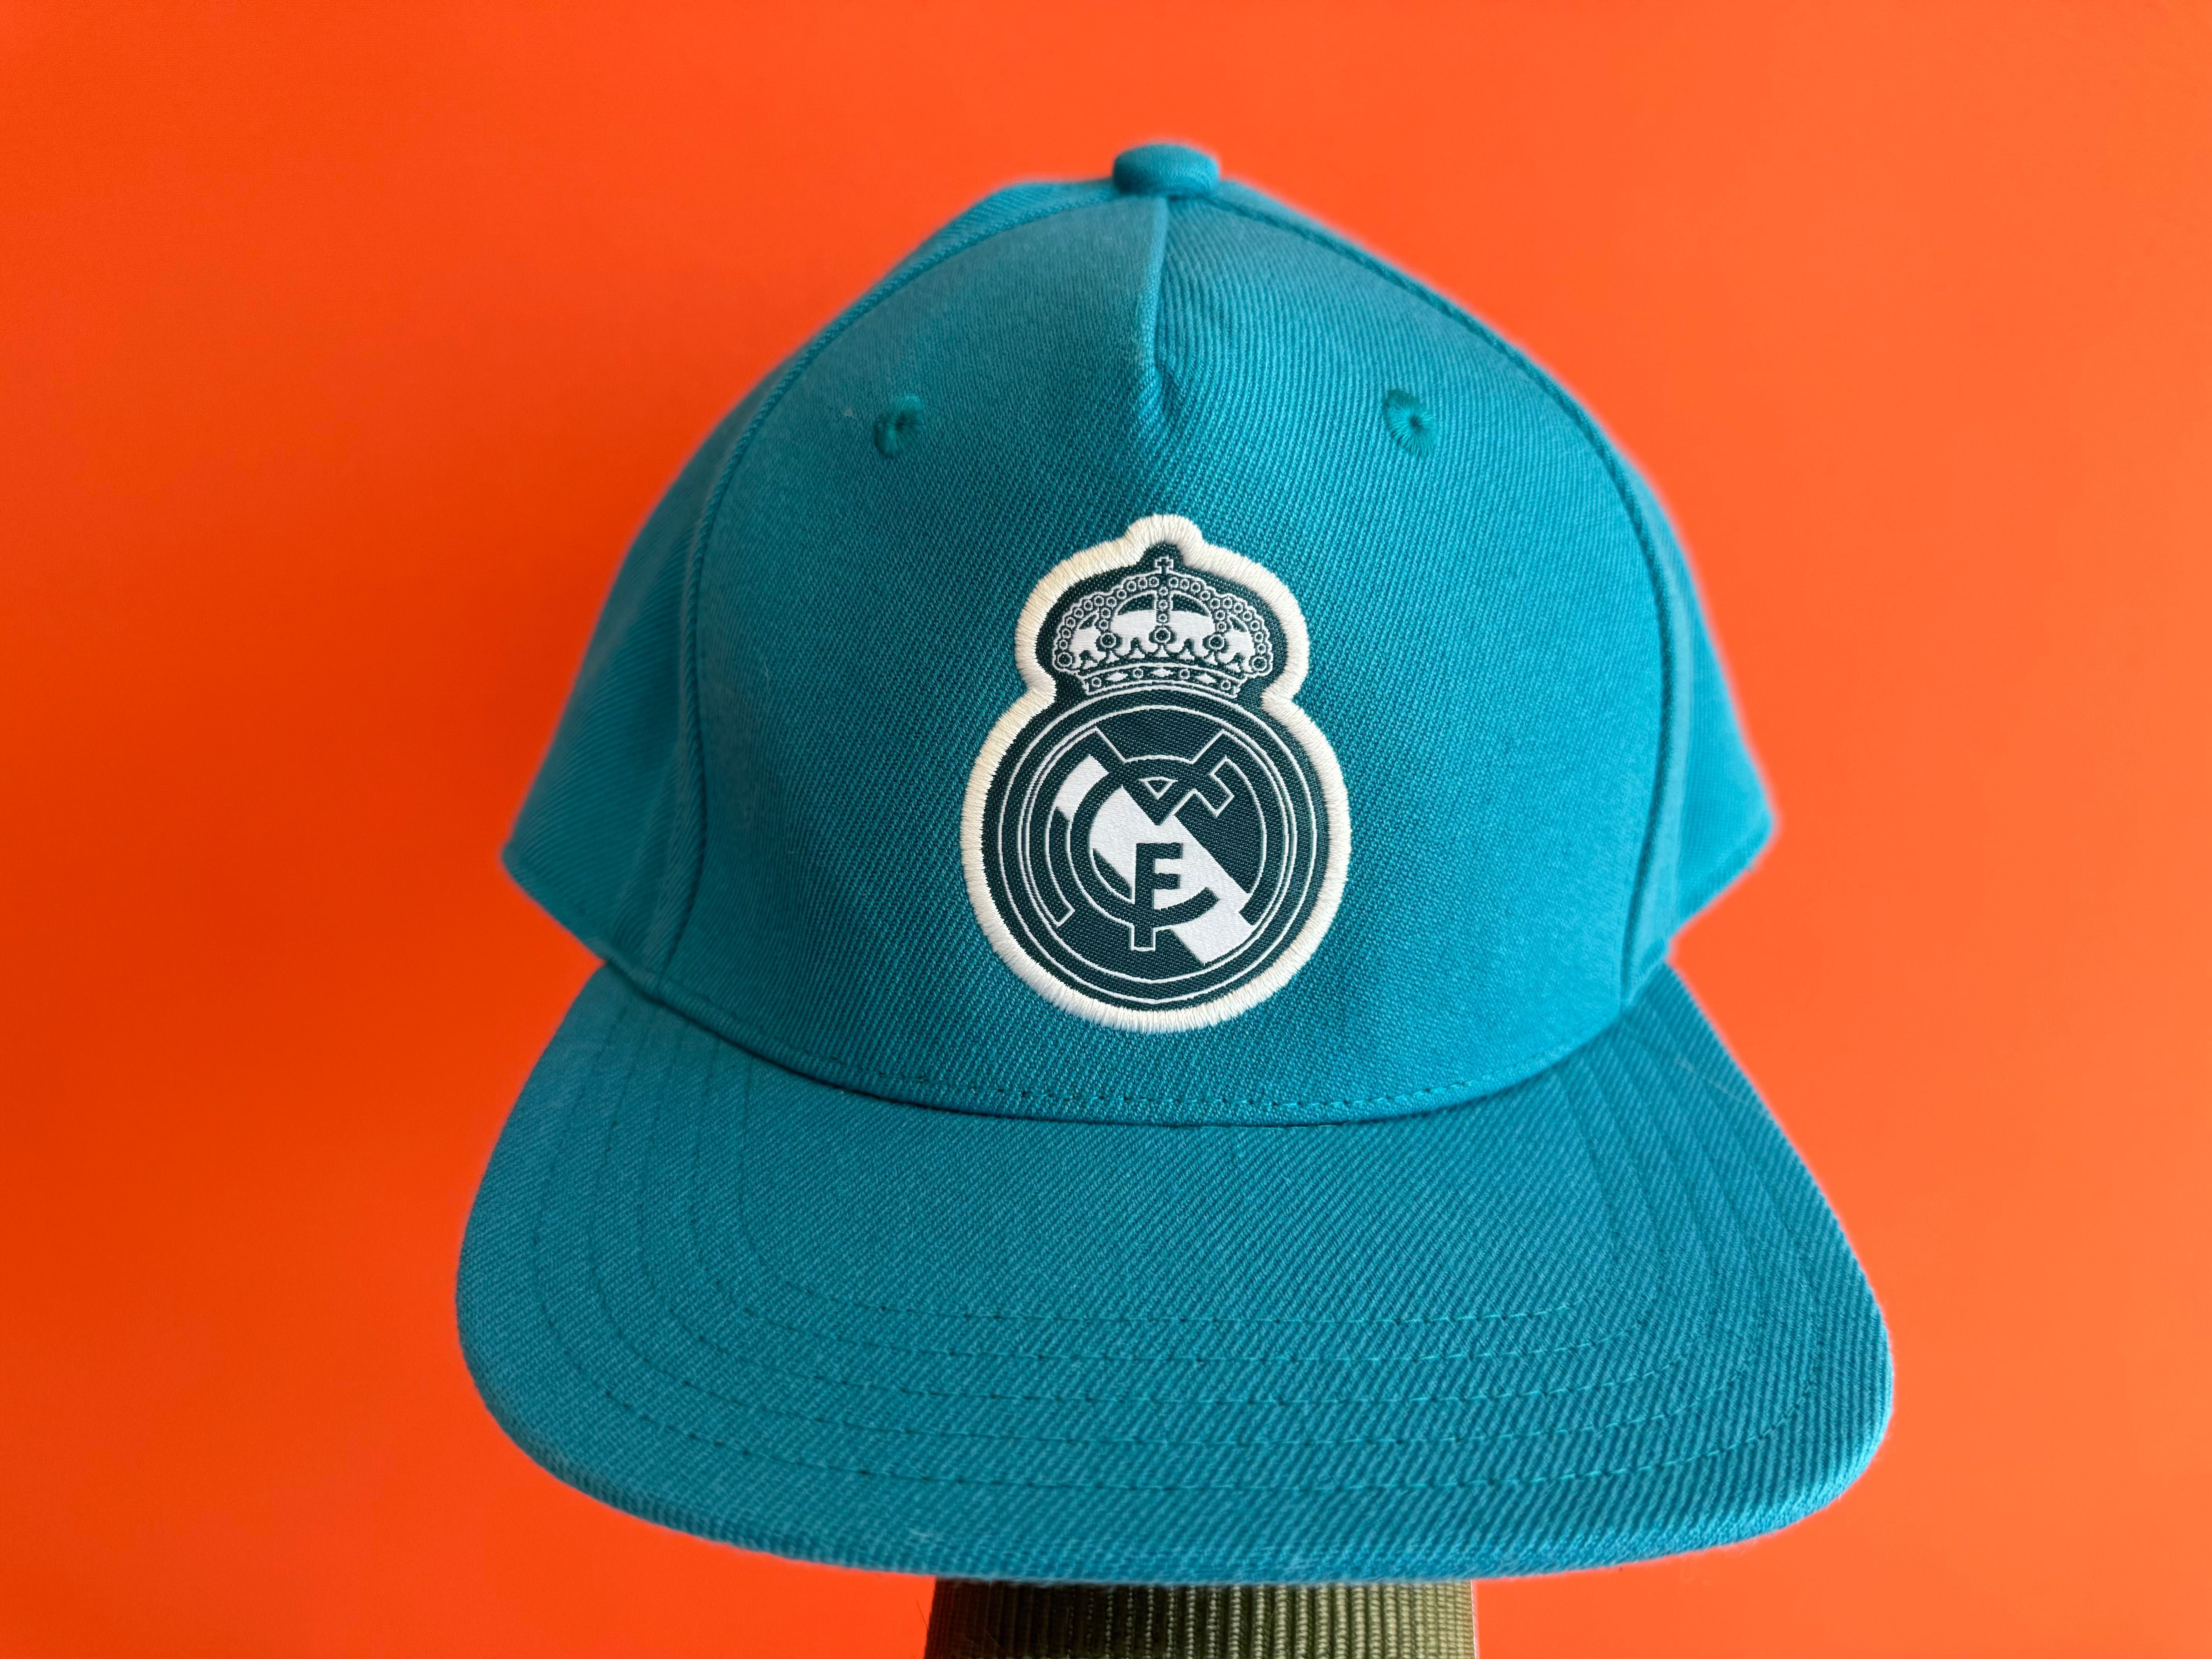 Adidas Real Madrid оригинал мужская кепка бейсболка